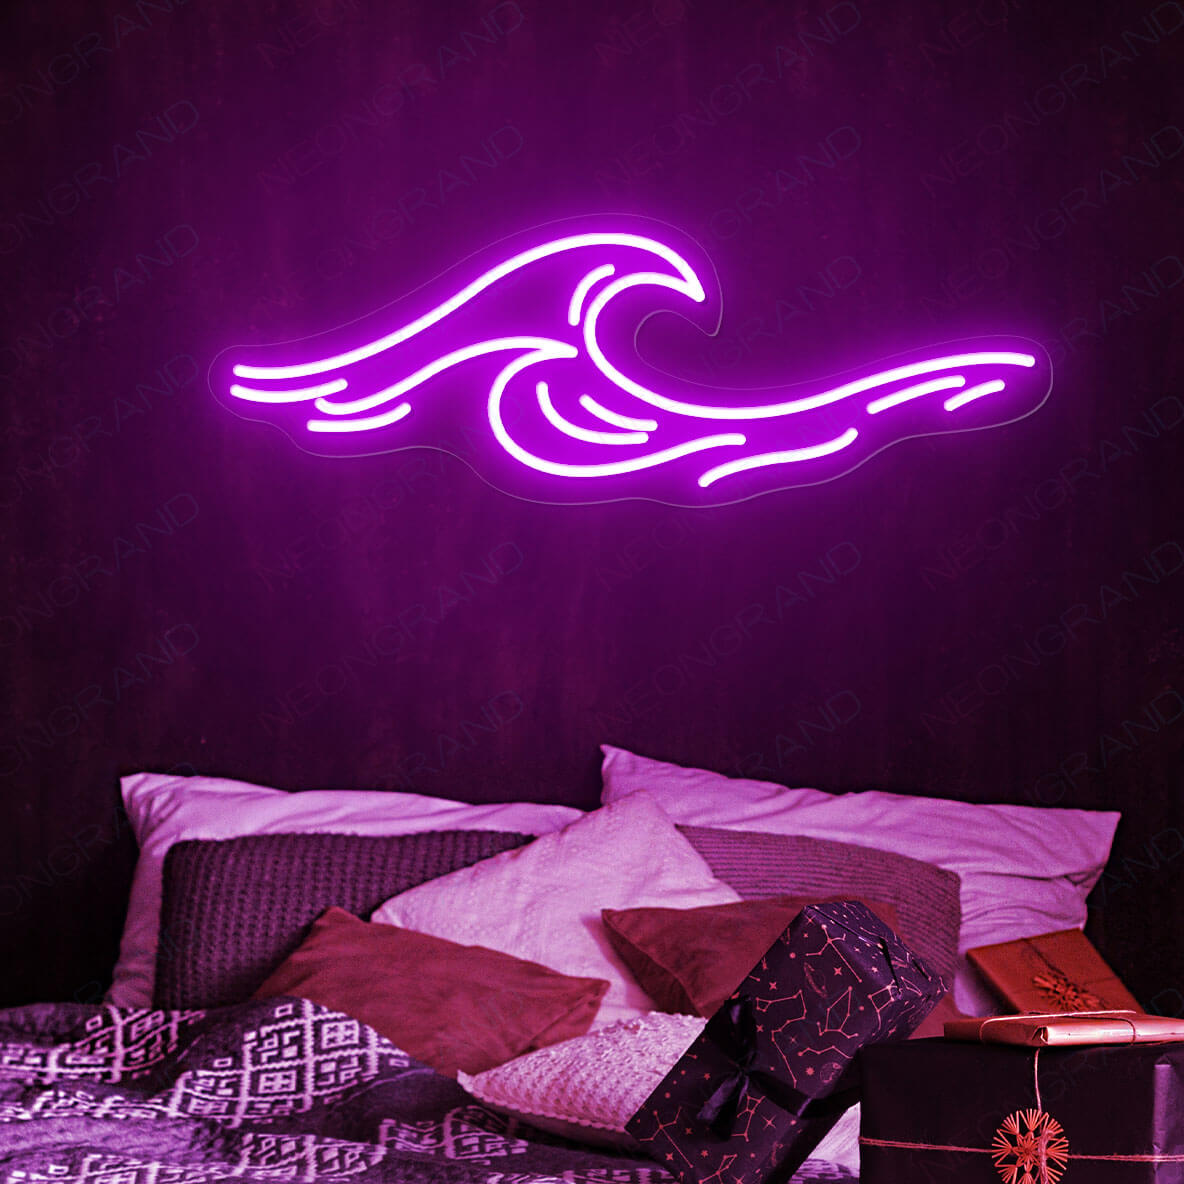 Ocean Waves Neon Sign Led Light purple